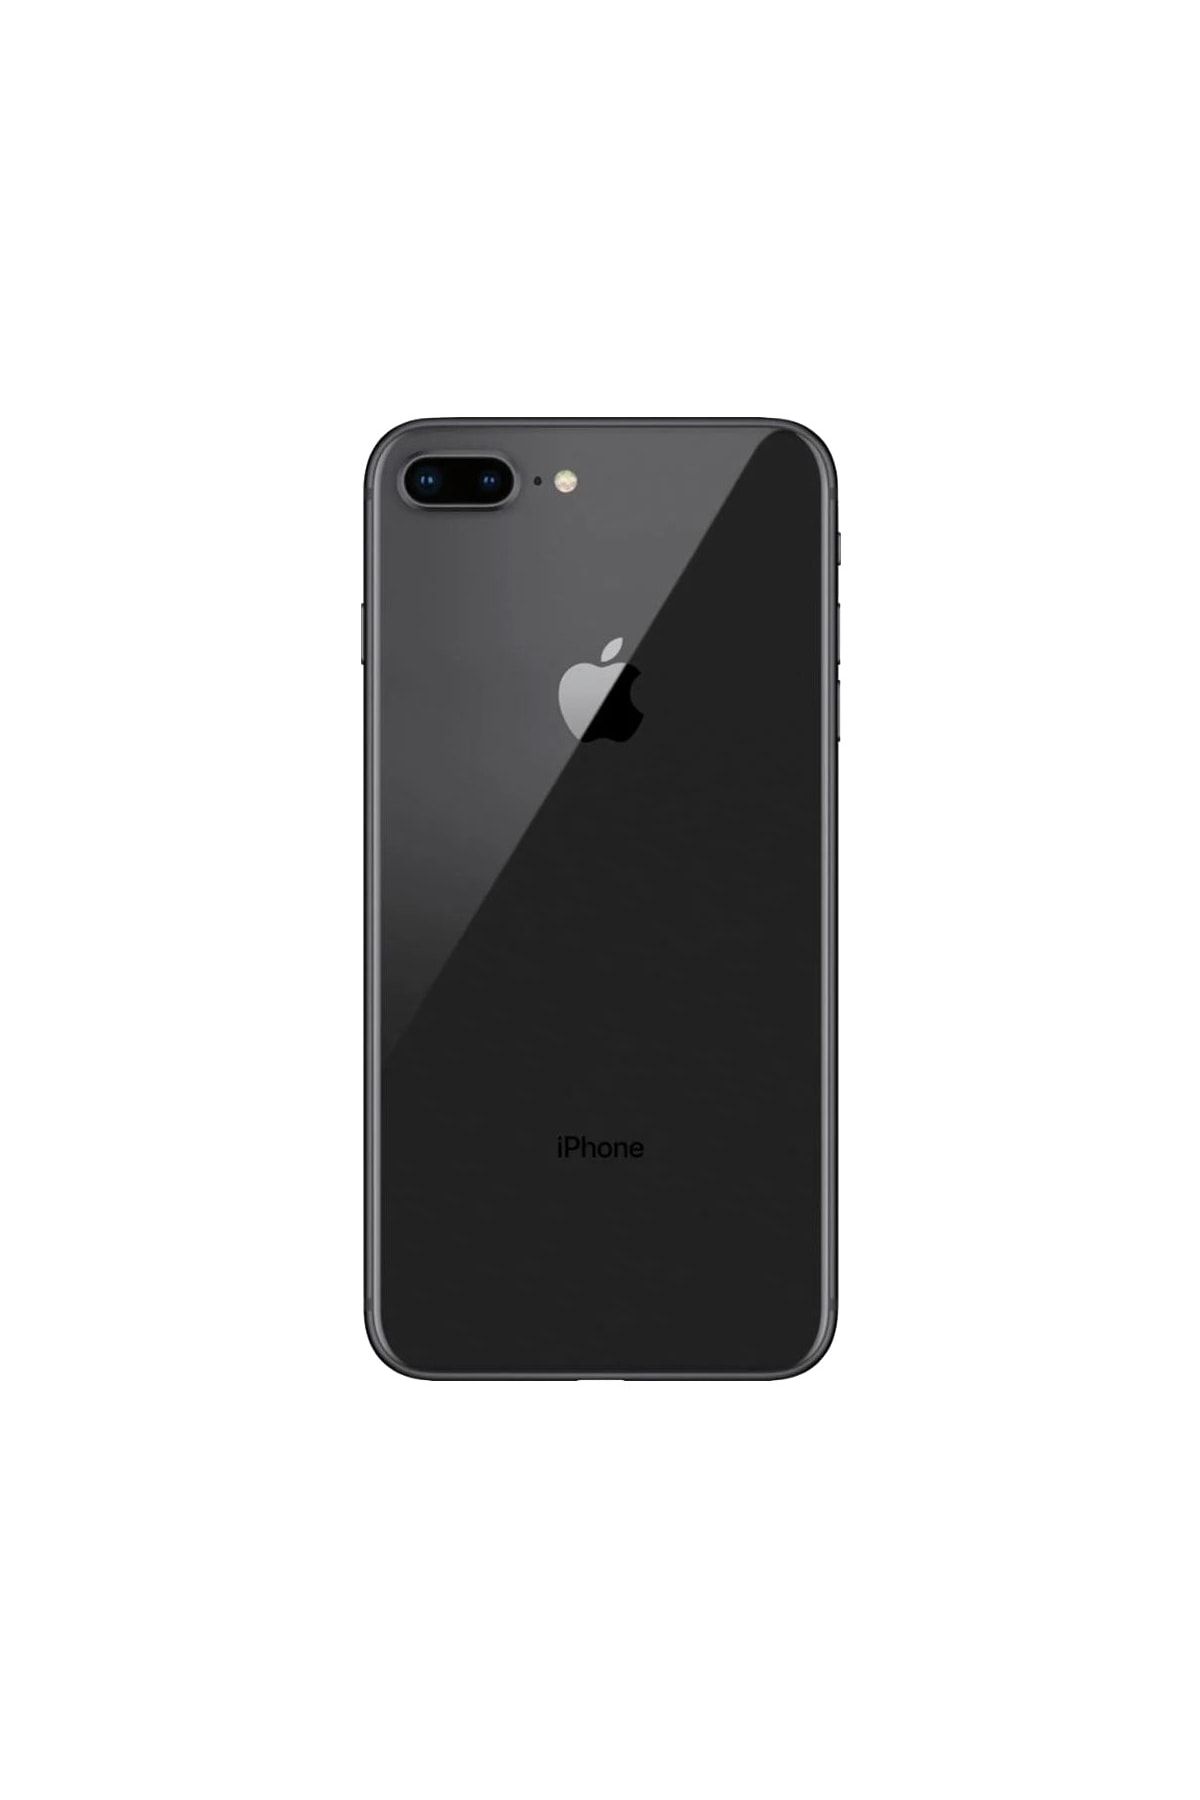 Apple Yenilenmiş iPhone 8 Plus 64 GB Uzay Grisi Cep Telefonu (12 Ay Garantili) - A Kalite